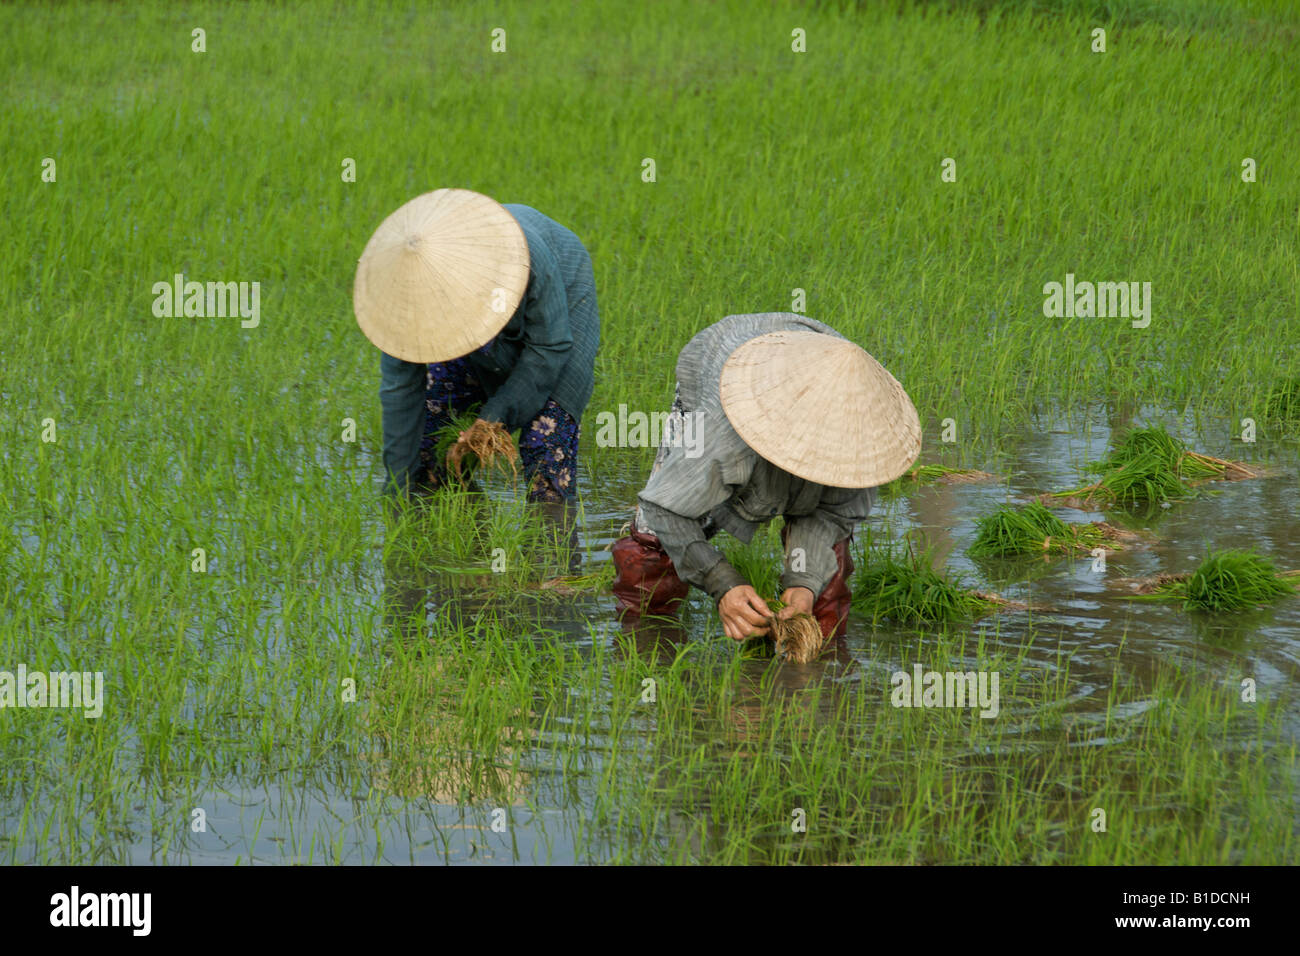 Planting rice near Hoi An Vietnam Stock Photo